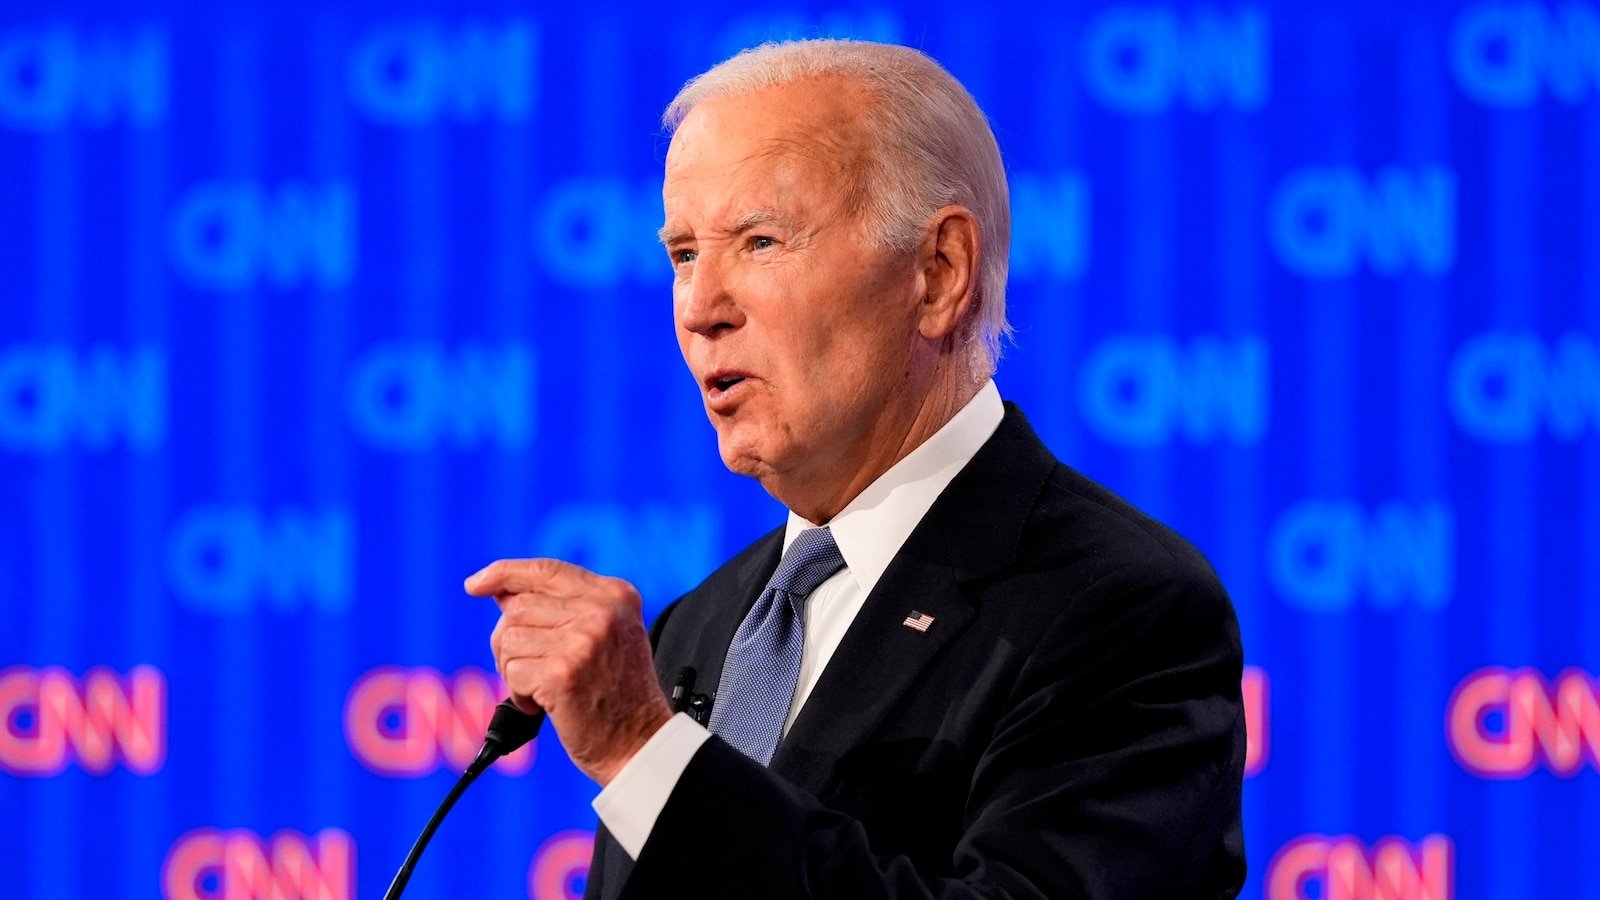 Some Democratic lawmakers call on party to delay virtual Biden nomination